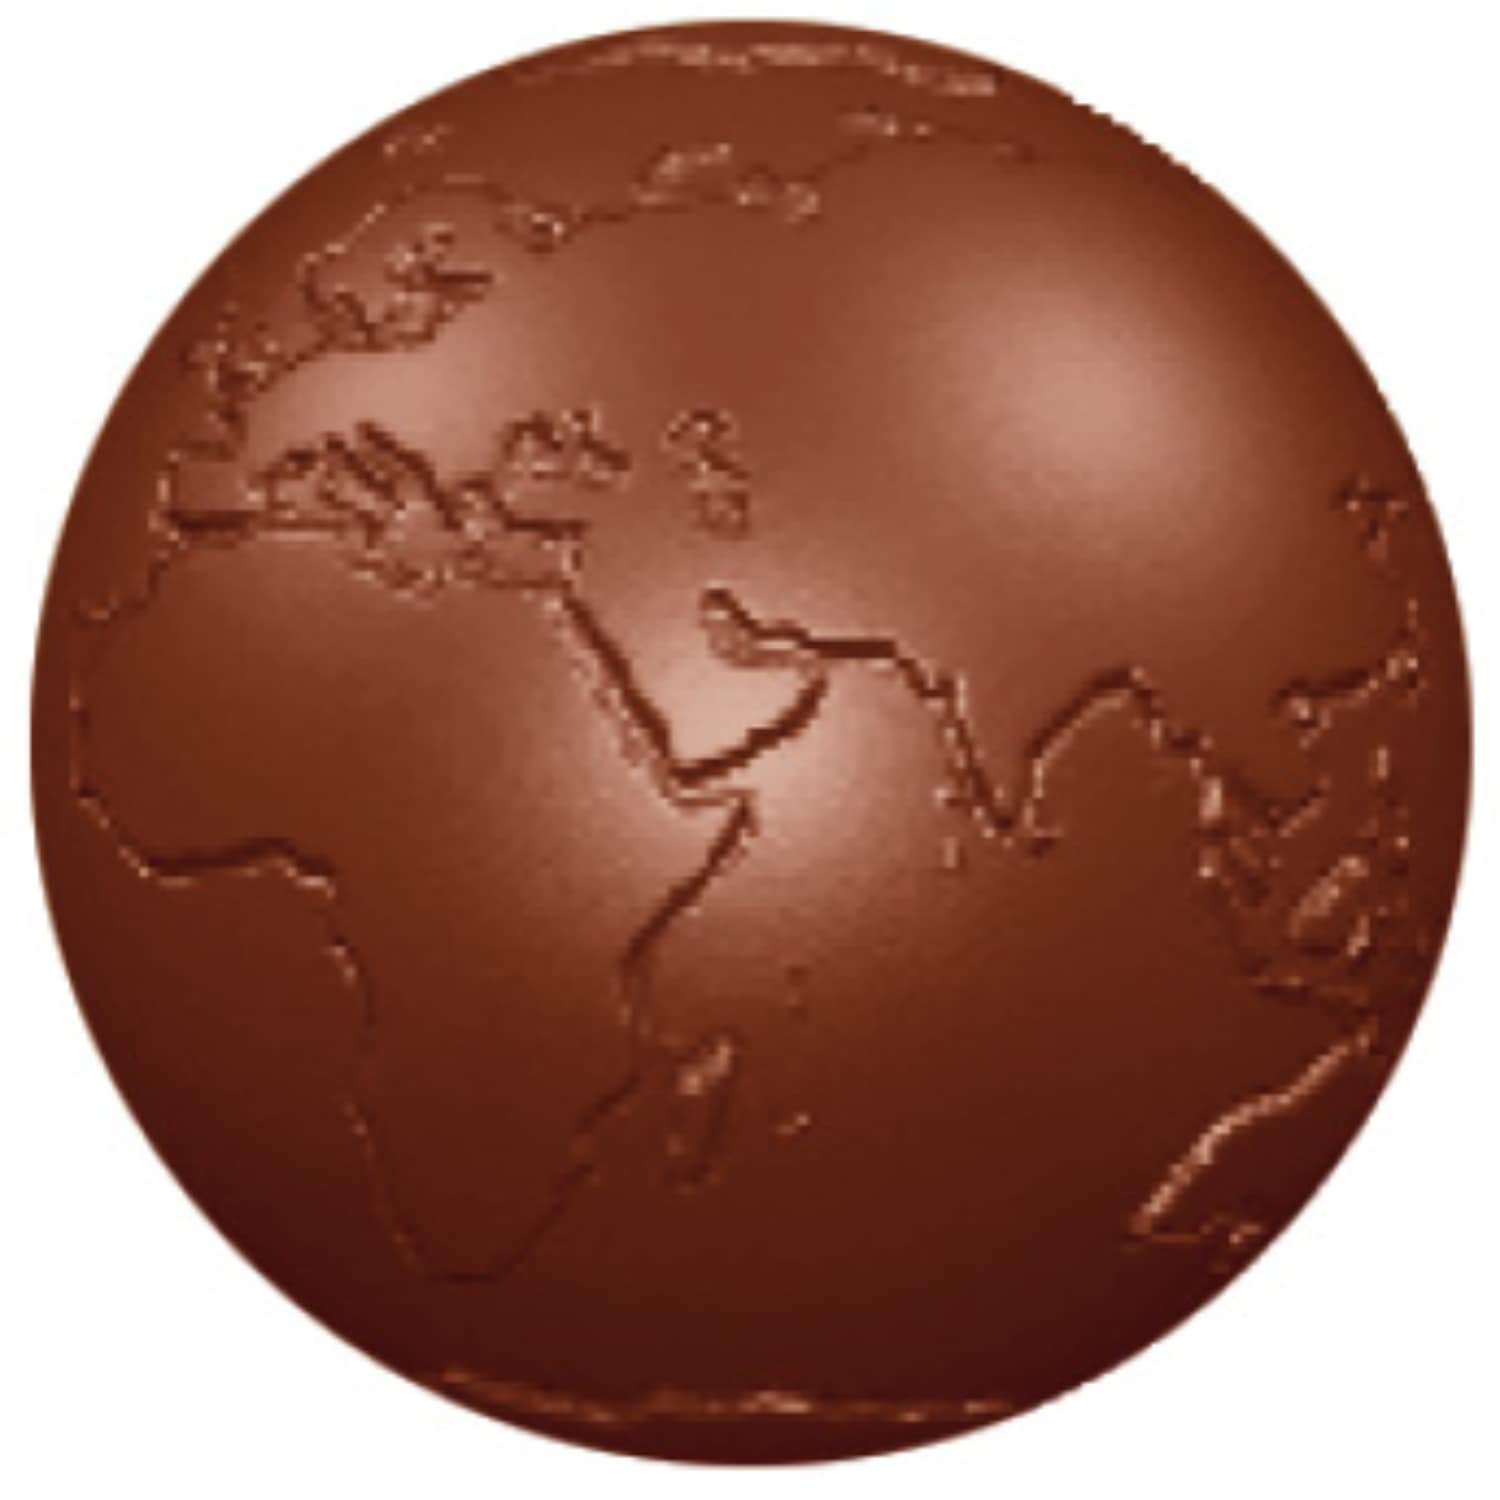 Schokoladenform "Kugel" 421648